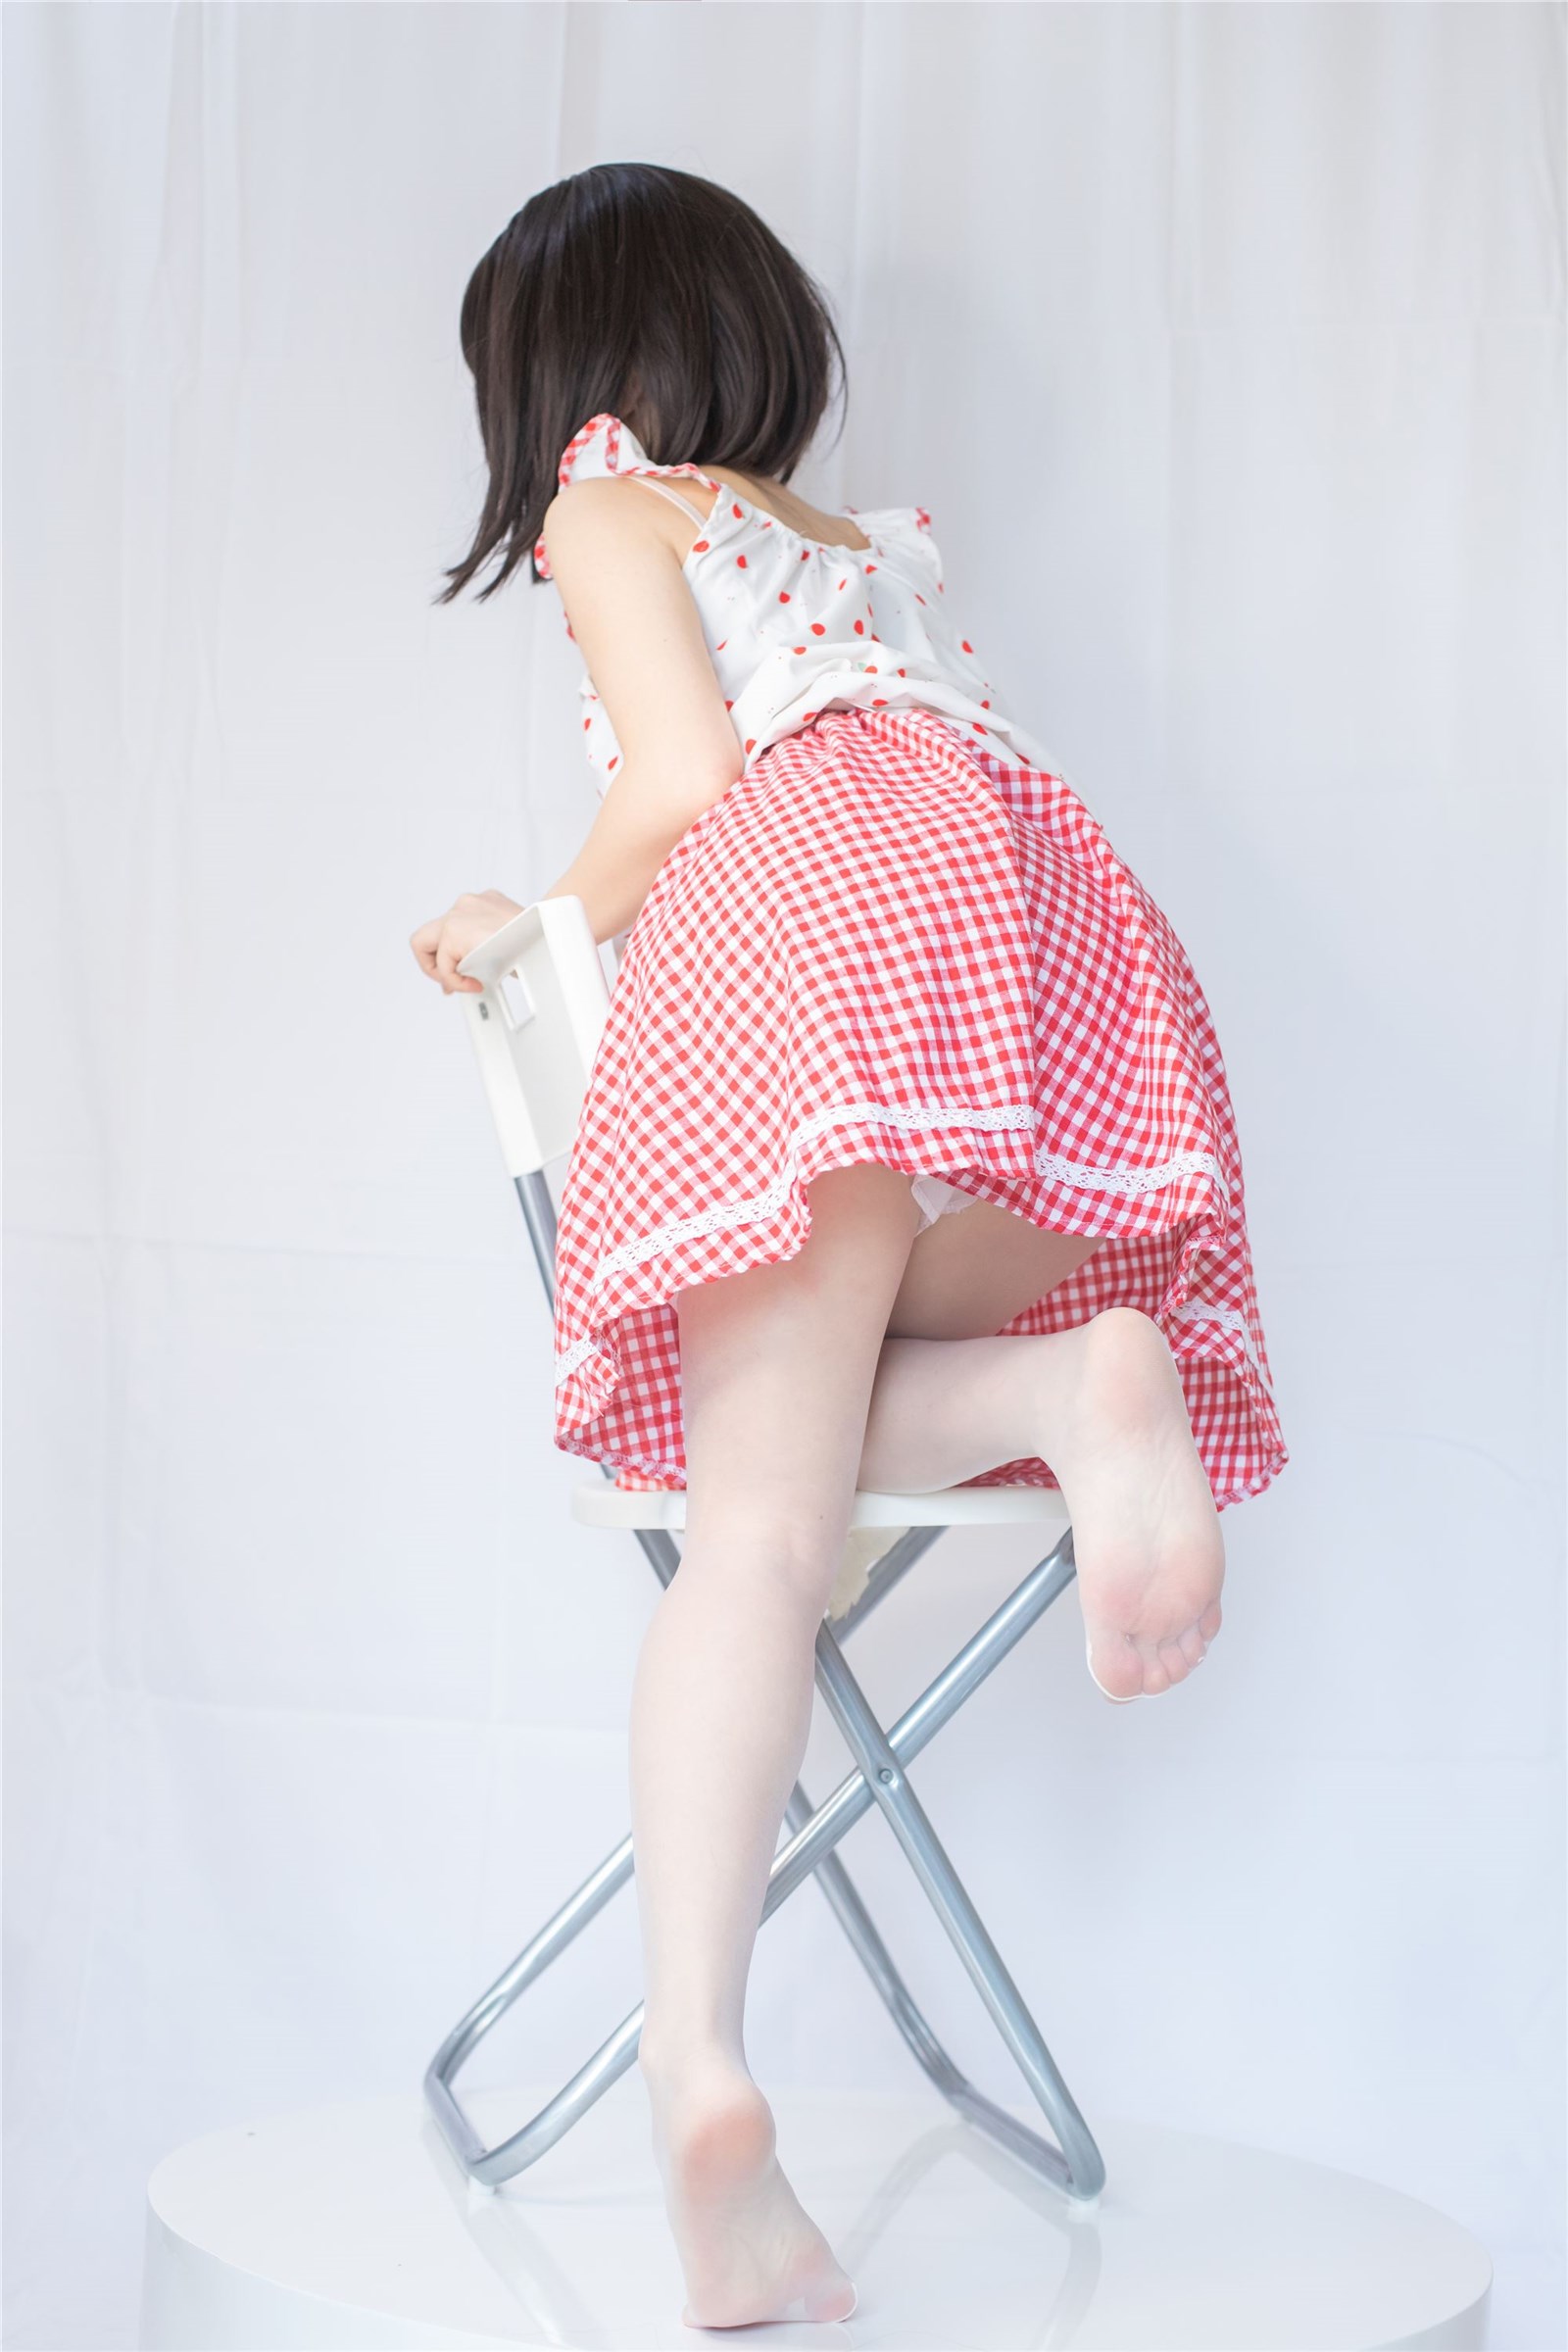 Nagari Kamizawa - Pink plaid dress(1)